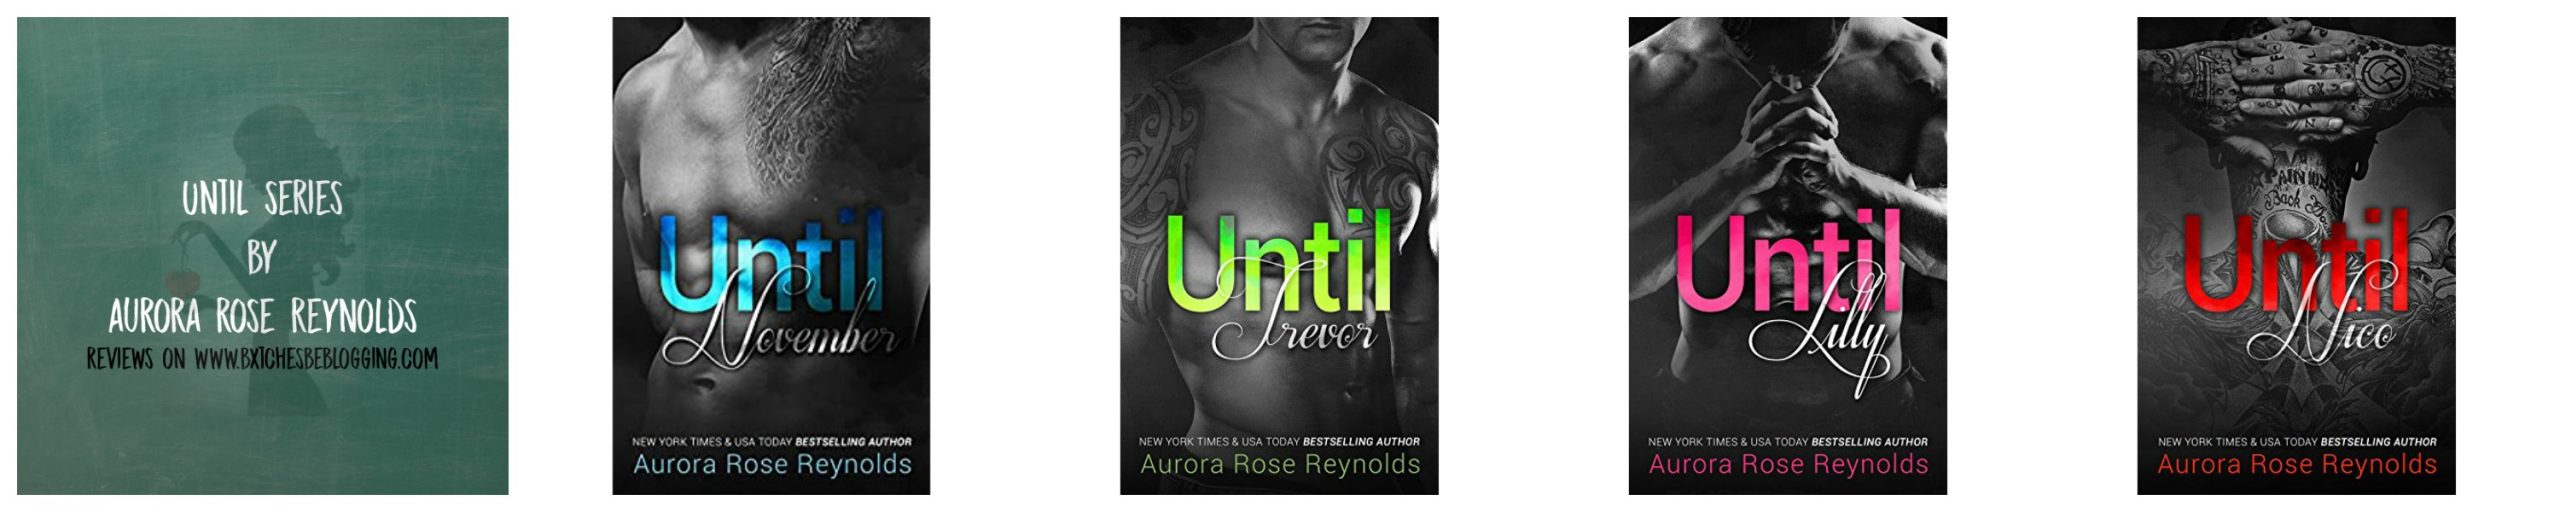 Until Series by Aurora Rose Reynolds | Reviews on www.bxtchesbeblogging.com